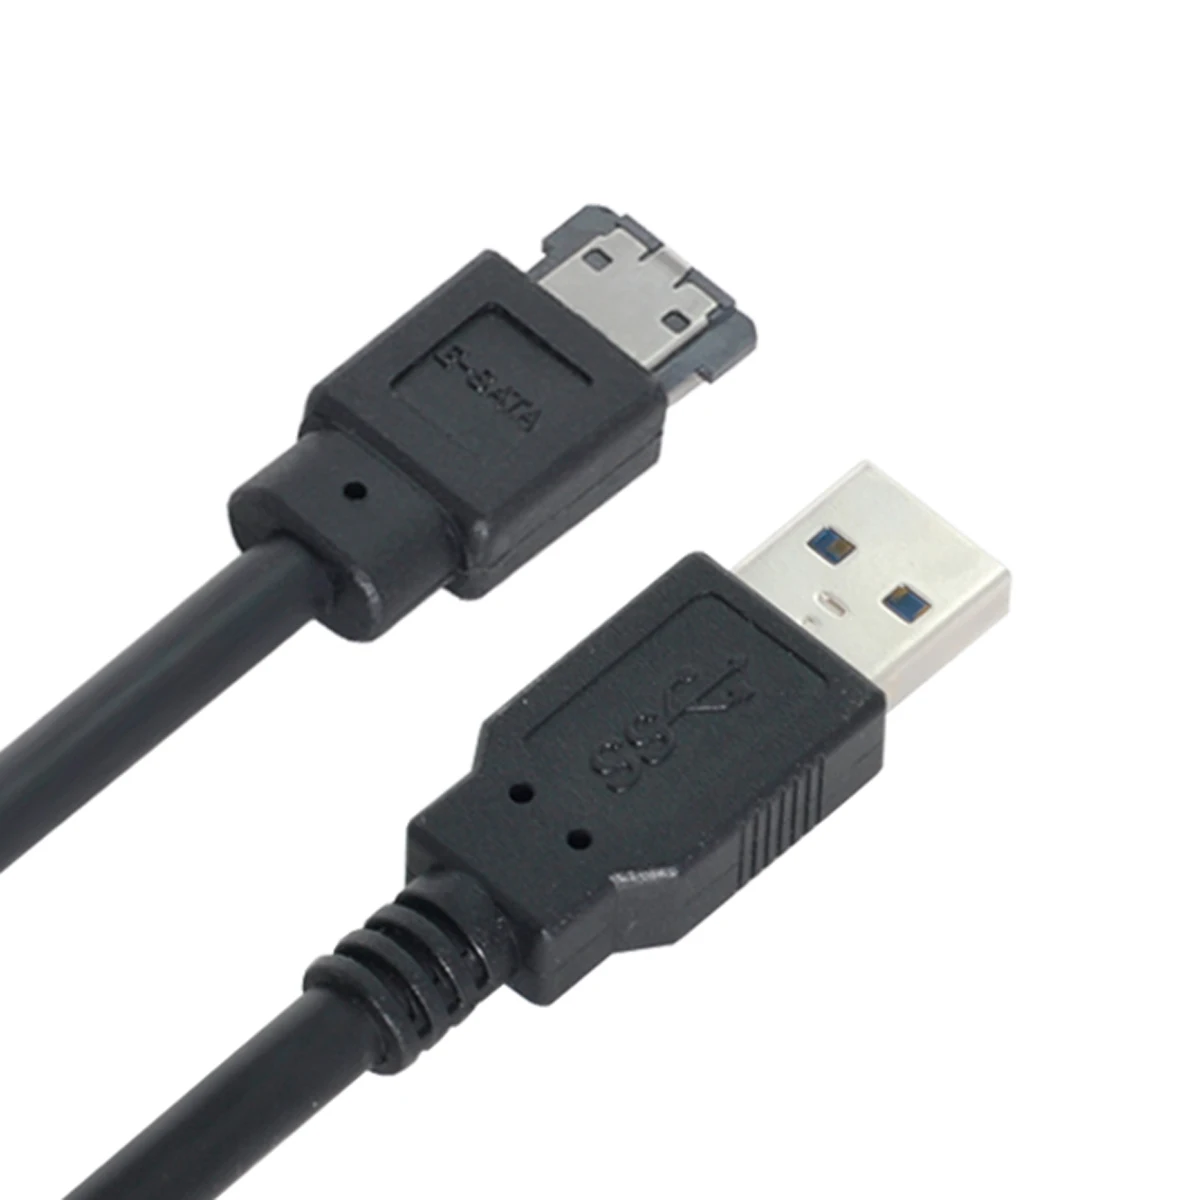 

CY USB 3.0 to Power Over eSATA DC5V Adapter USB2.0 to HDD/SSD/ODD eSATAp Converter